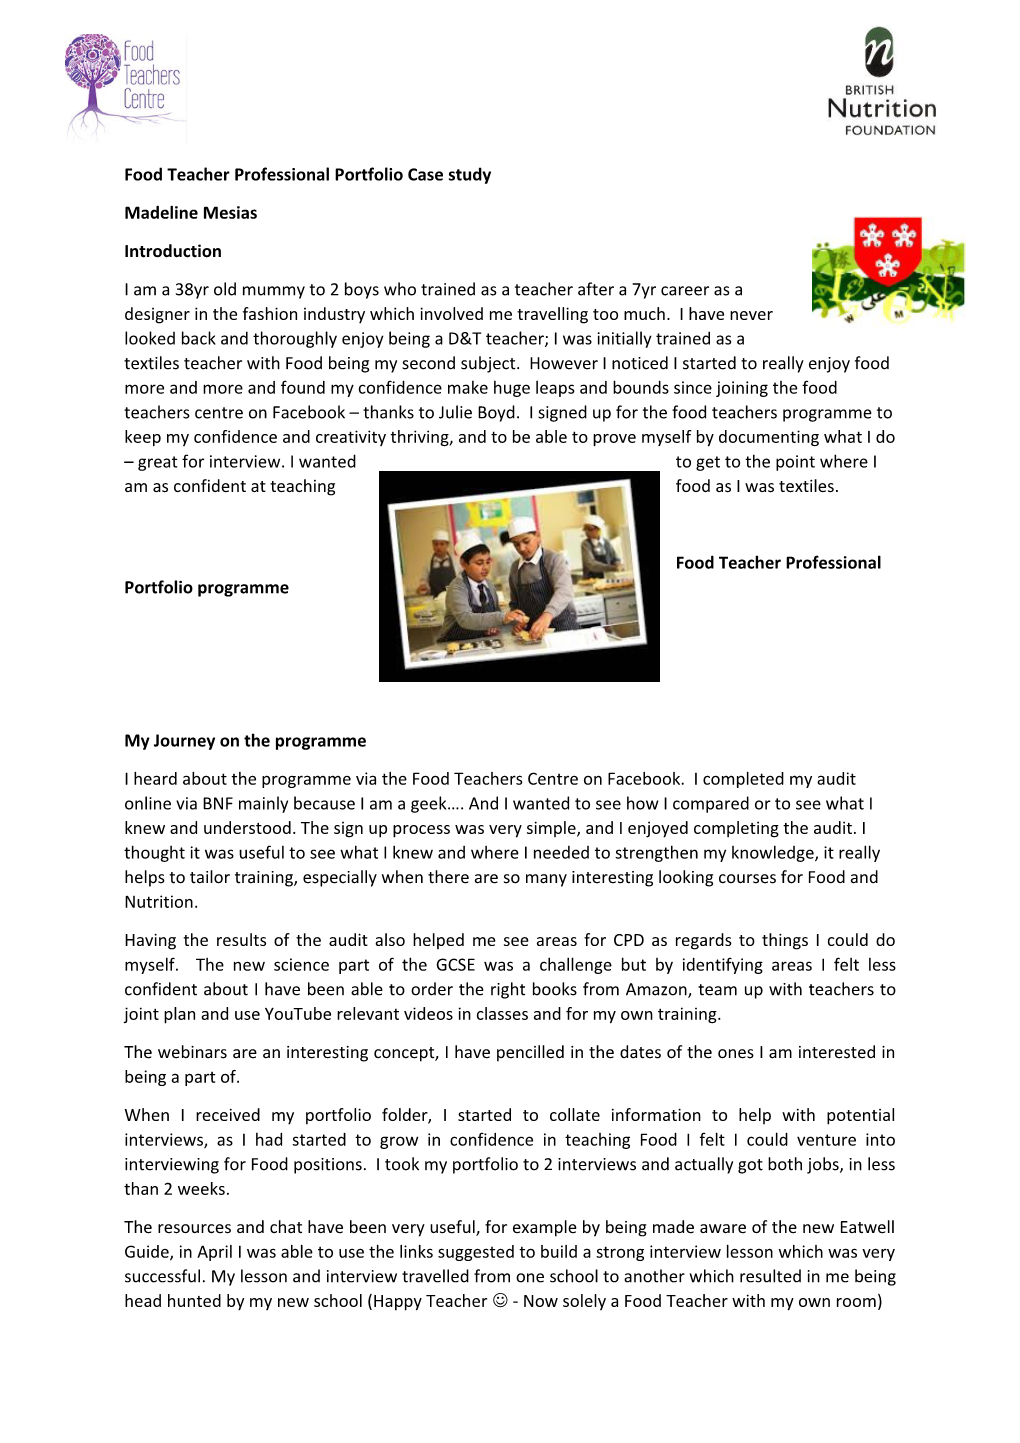 Food Teacher Professional Portfolio Case Study